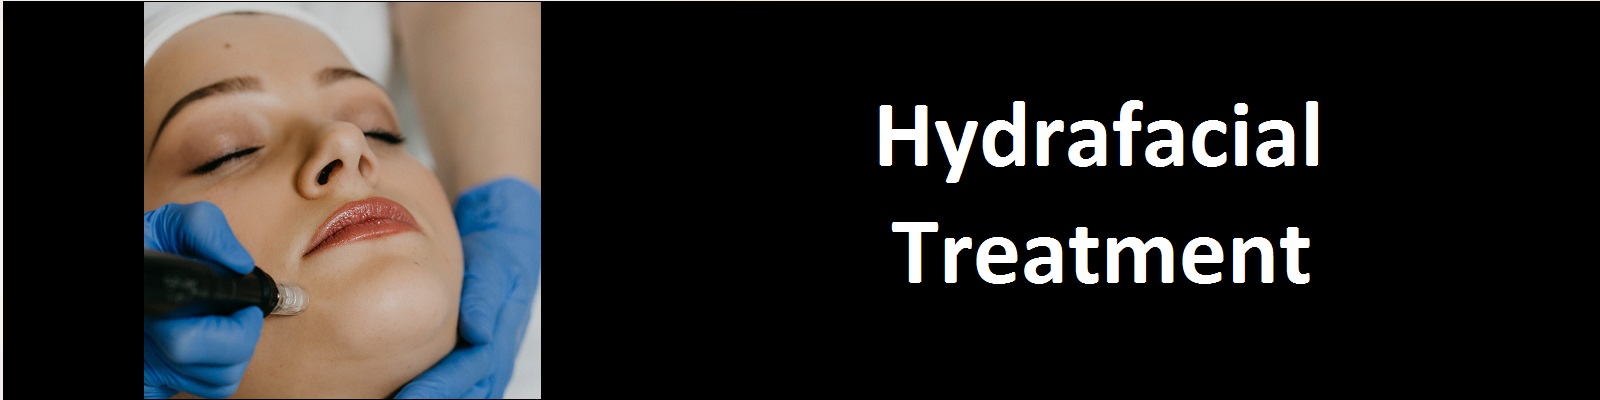 hydrafacial-treatment